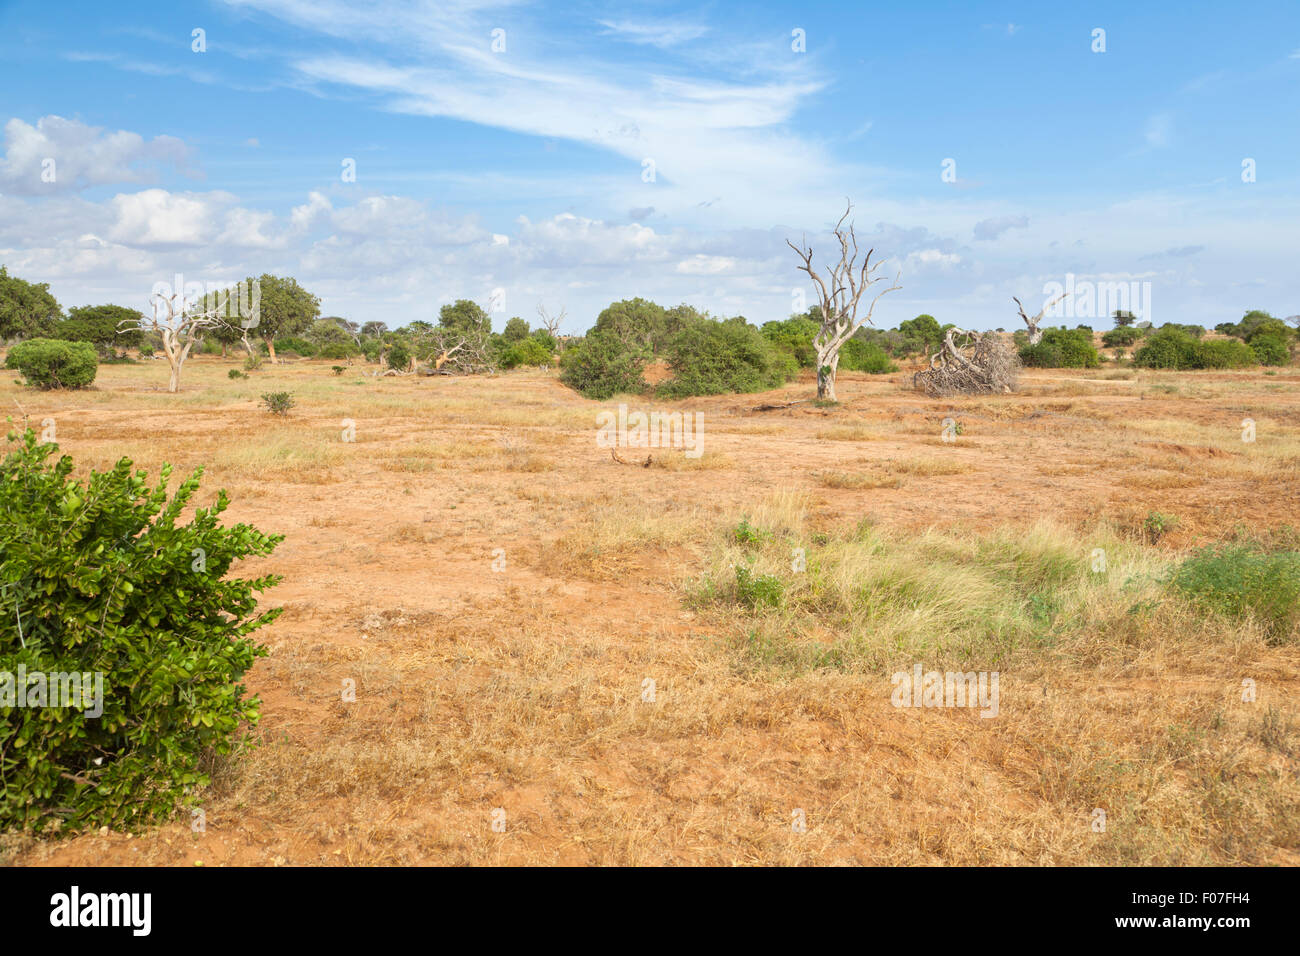 Dry savanna landscape in Tsavo East National Park in Kenya. Stock Photo